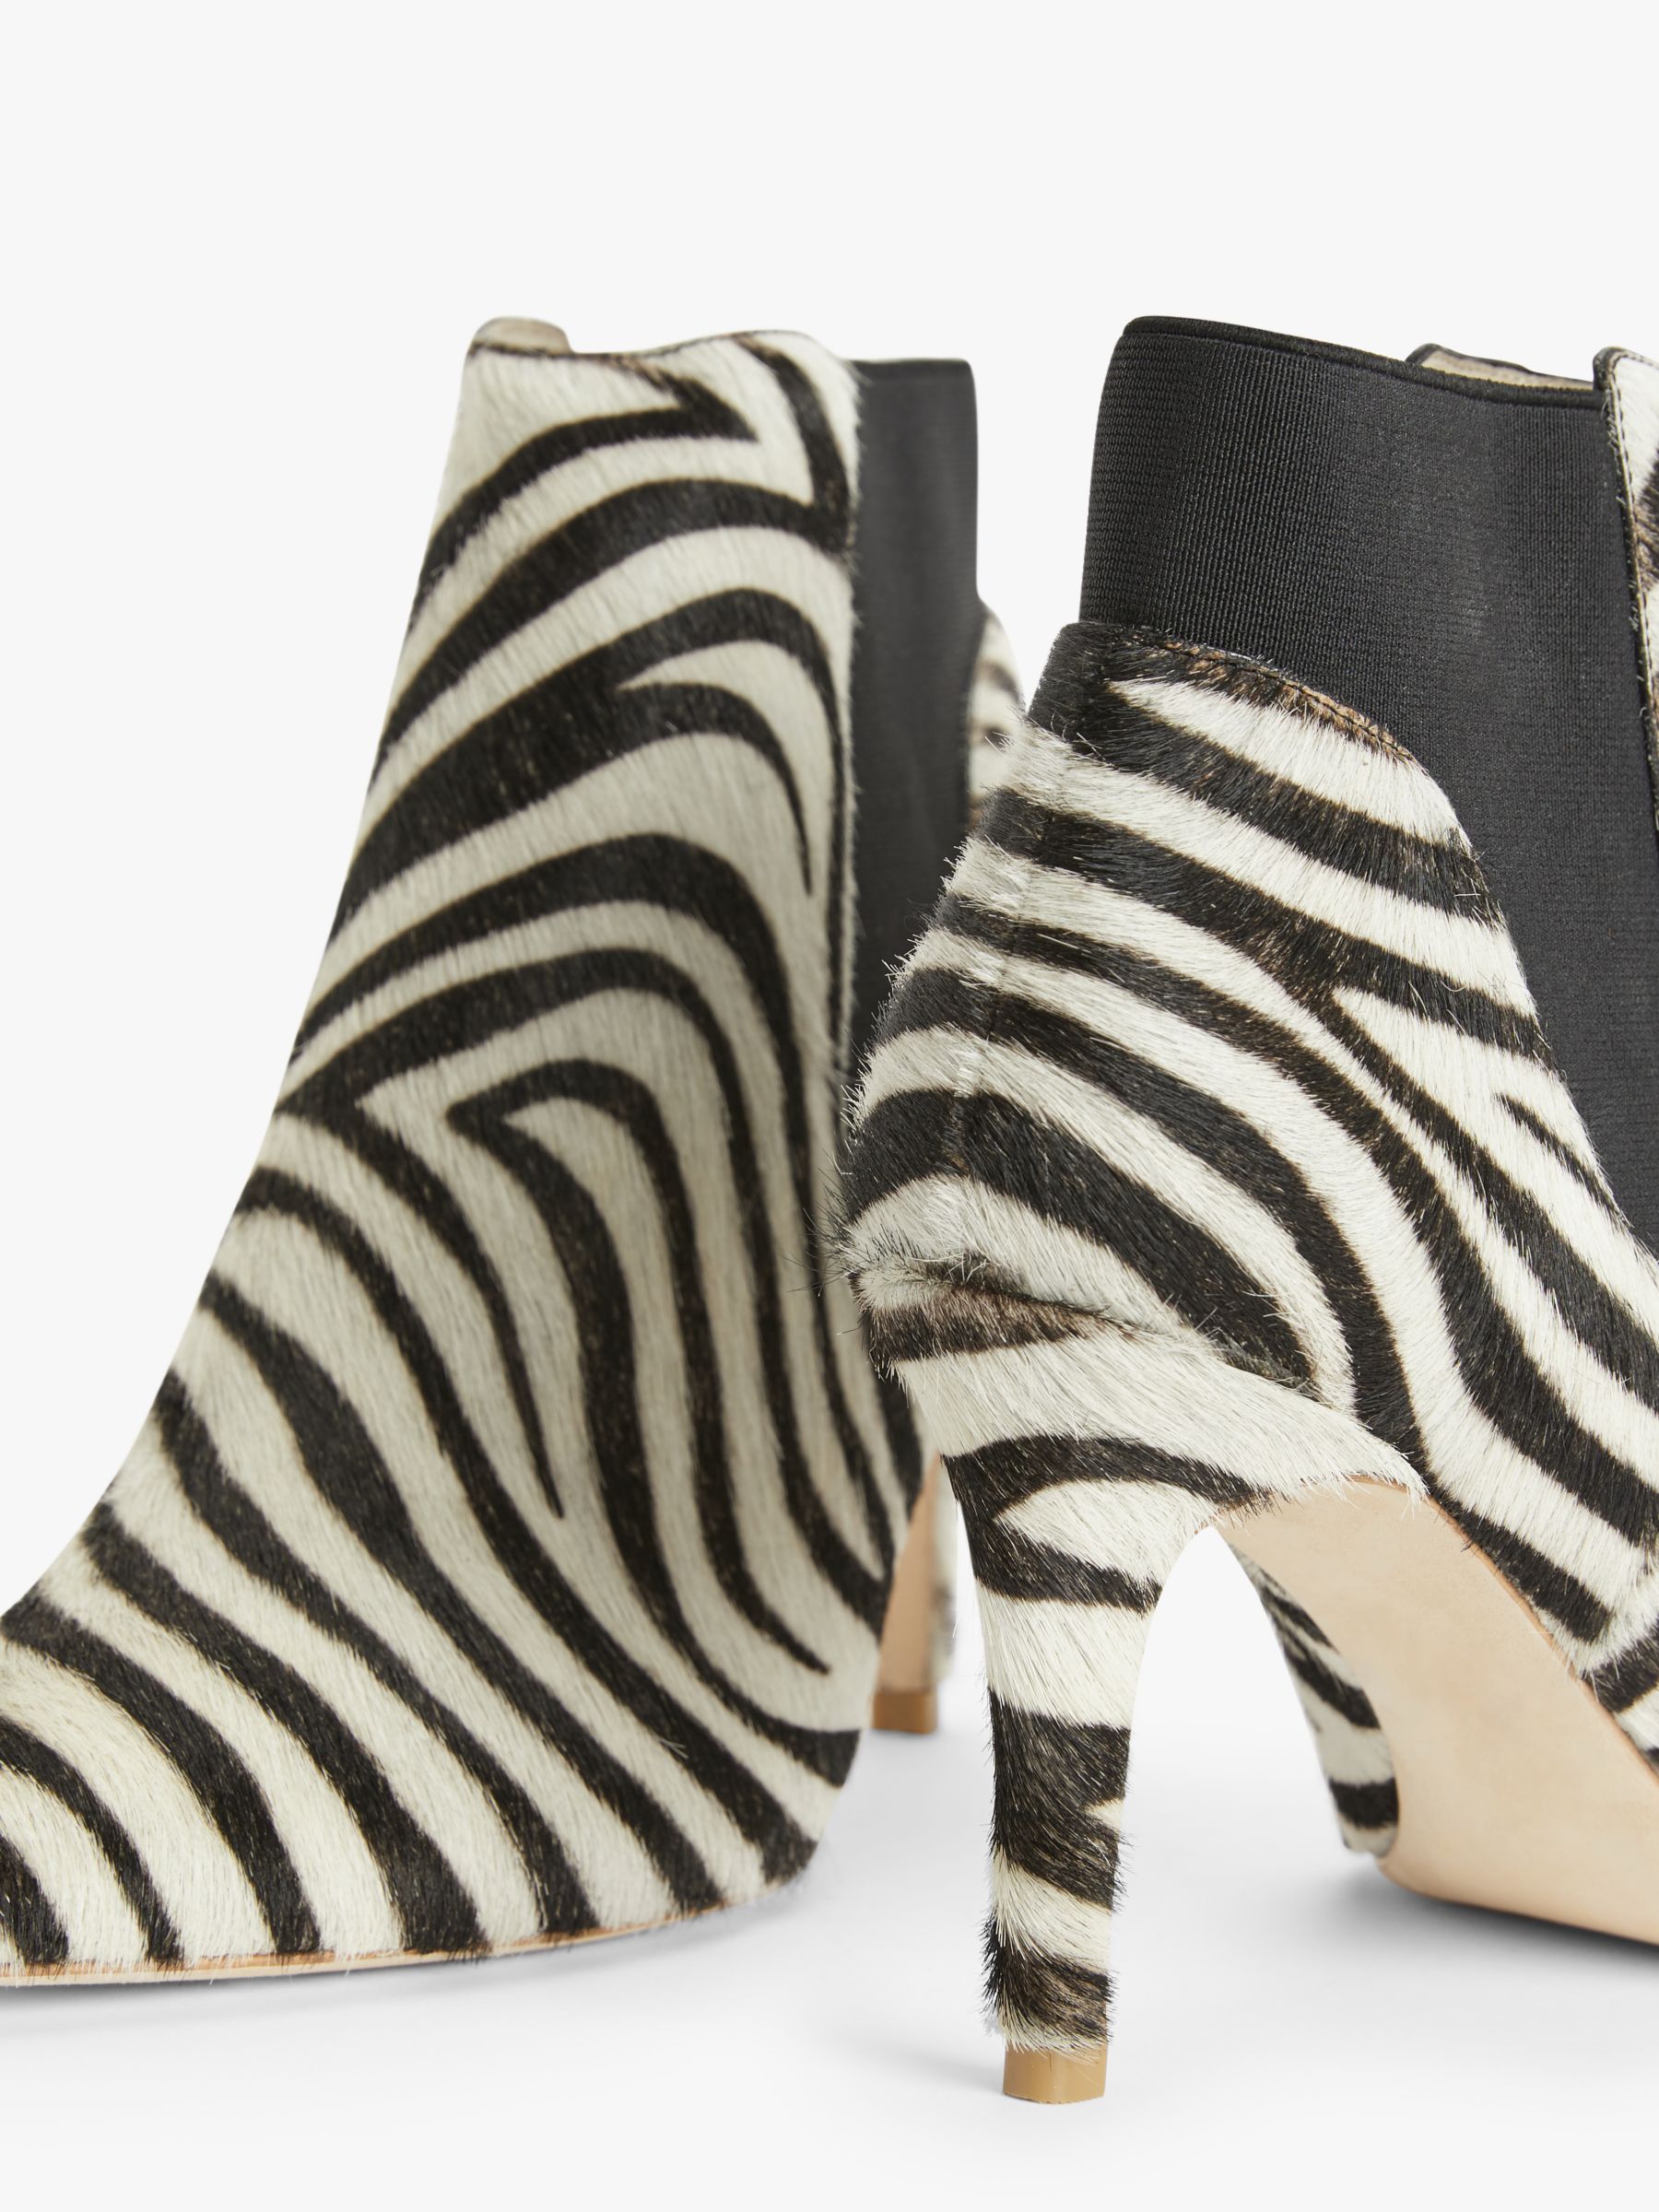 Boden Elsworth Pointed Toe Ankle Boots, Zebra Print